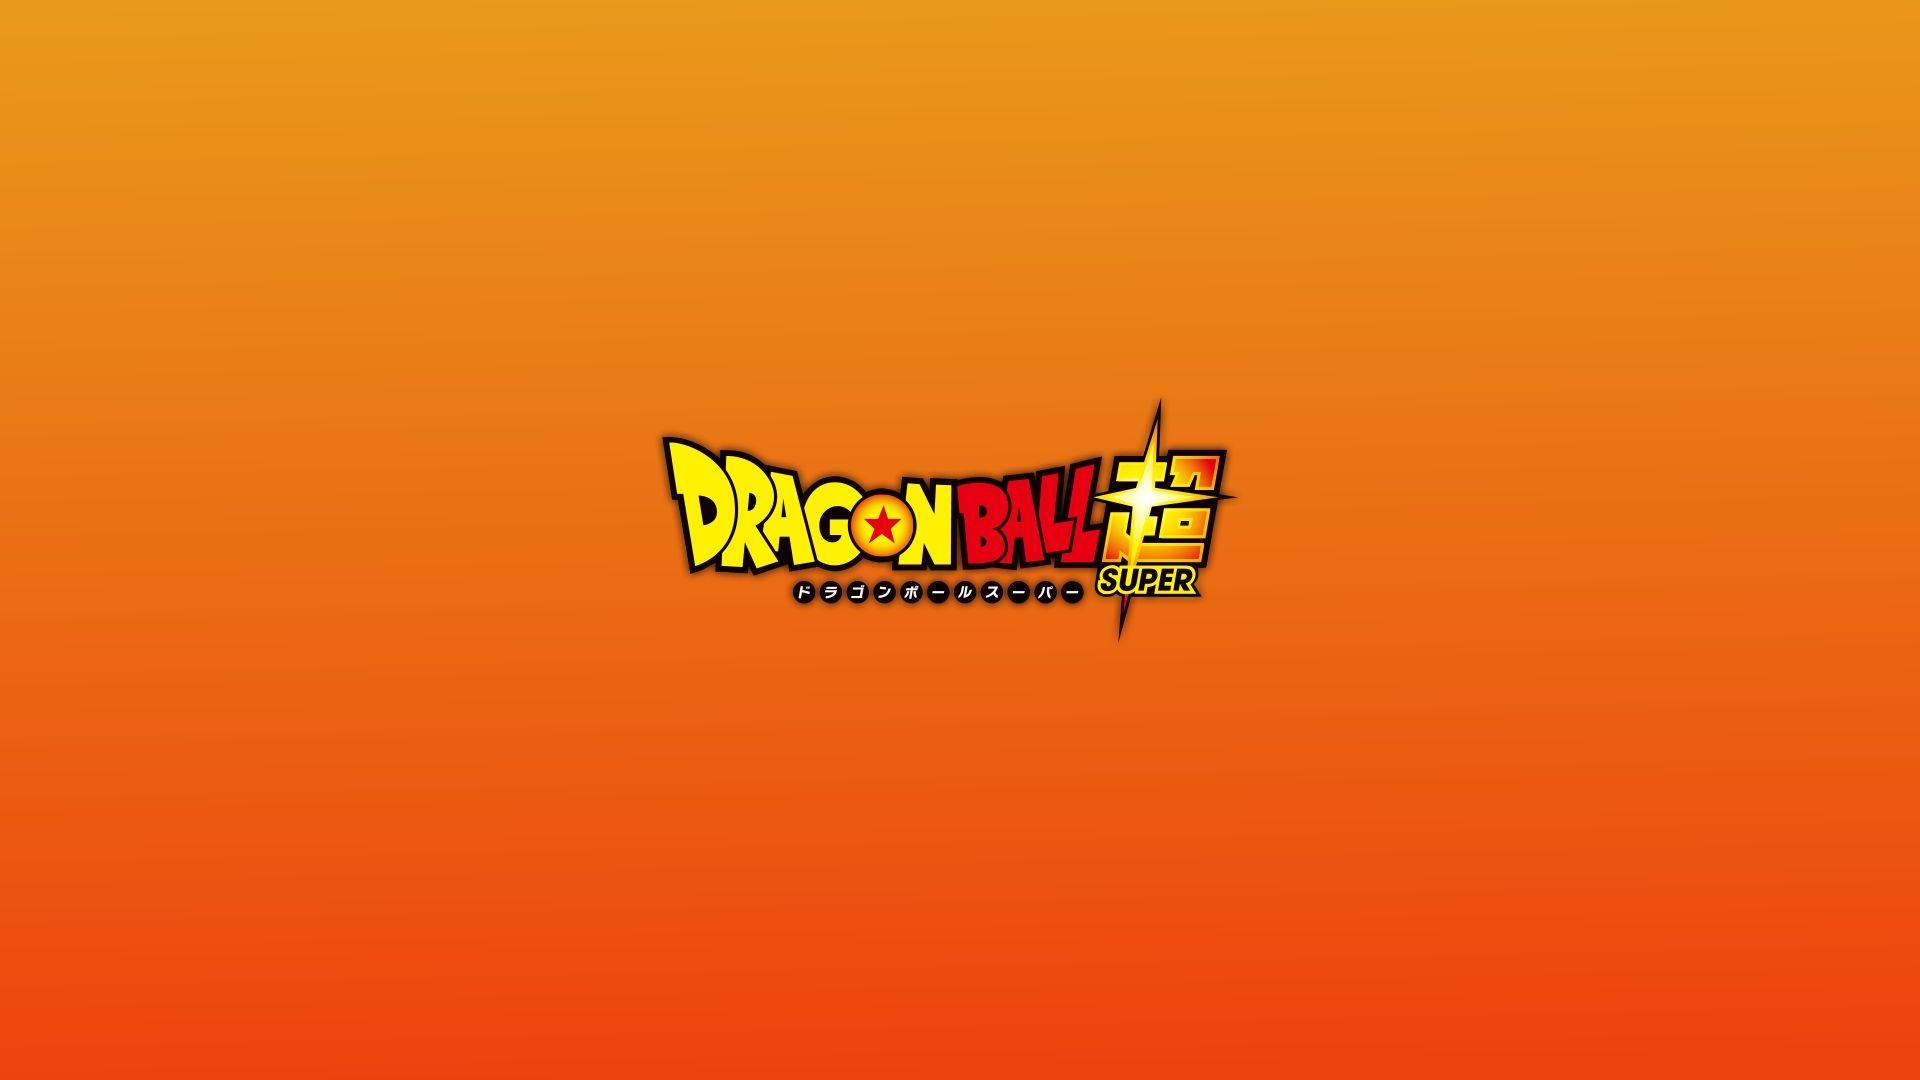 1920 x 1080 · jpeg - Dragon Ball Super Logo Wallpaper - HD Wallpapers 1080p | Dragon ball ...